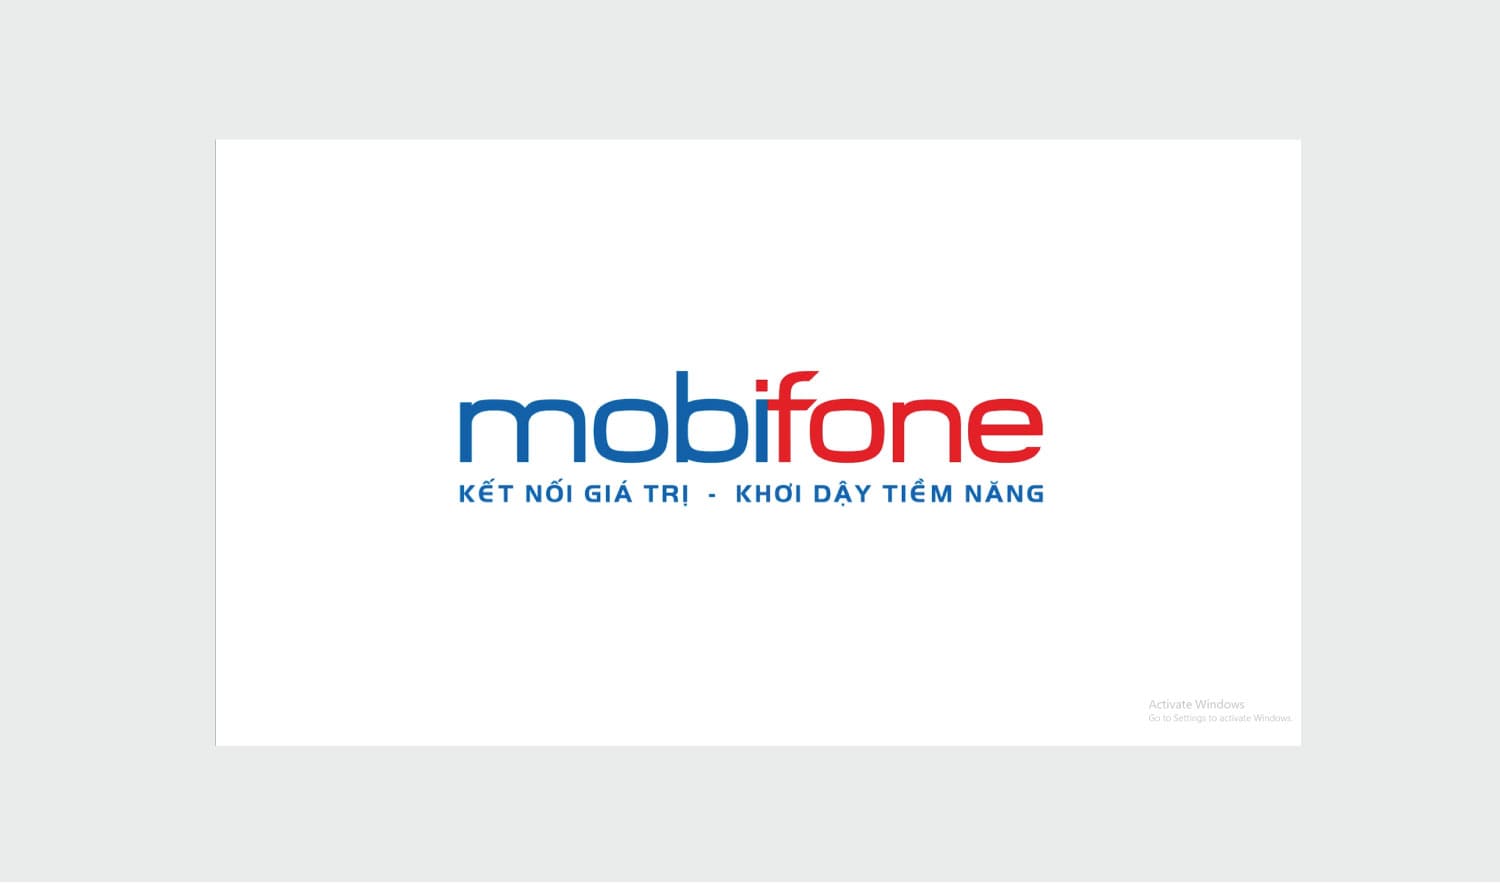 Sản xuất tvc Mobifone OCR